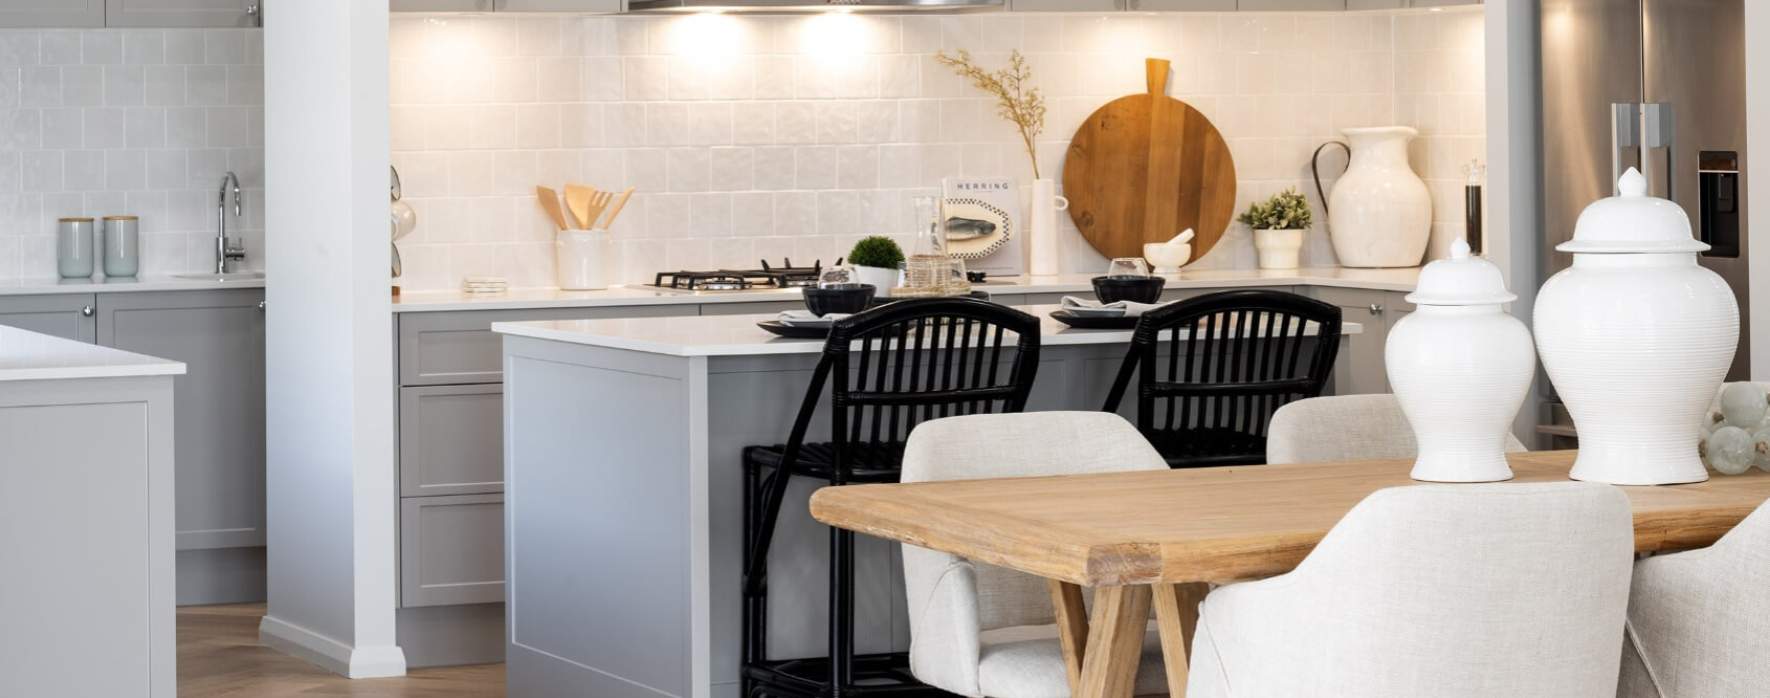 Carrington Promenade Single Storey House Design Kitchen